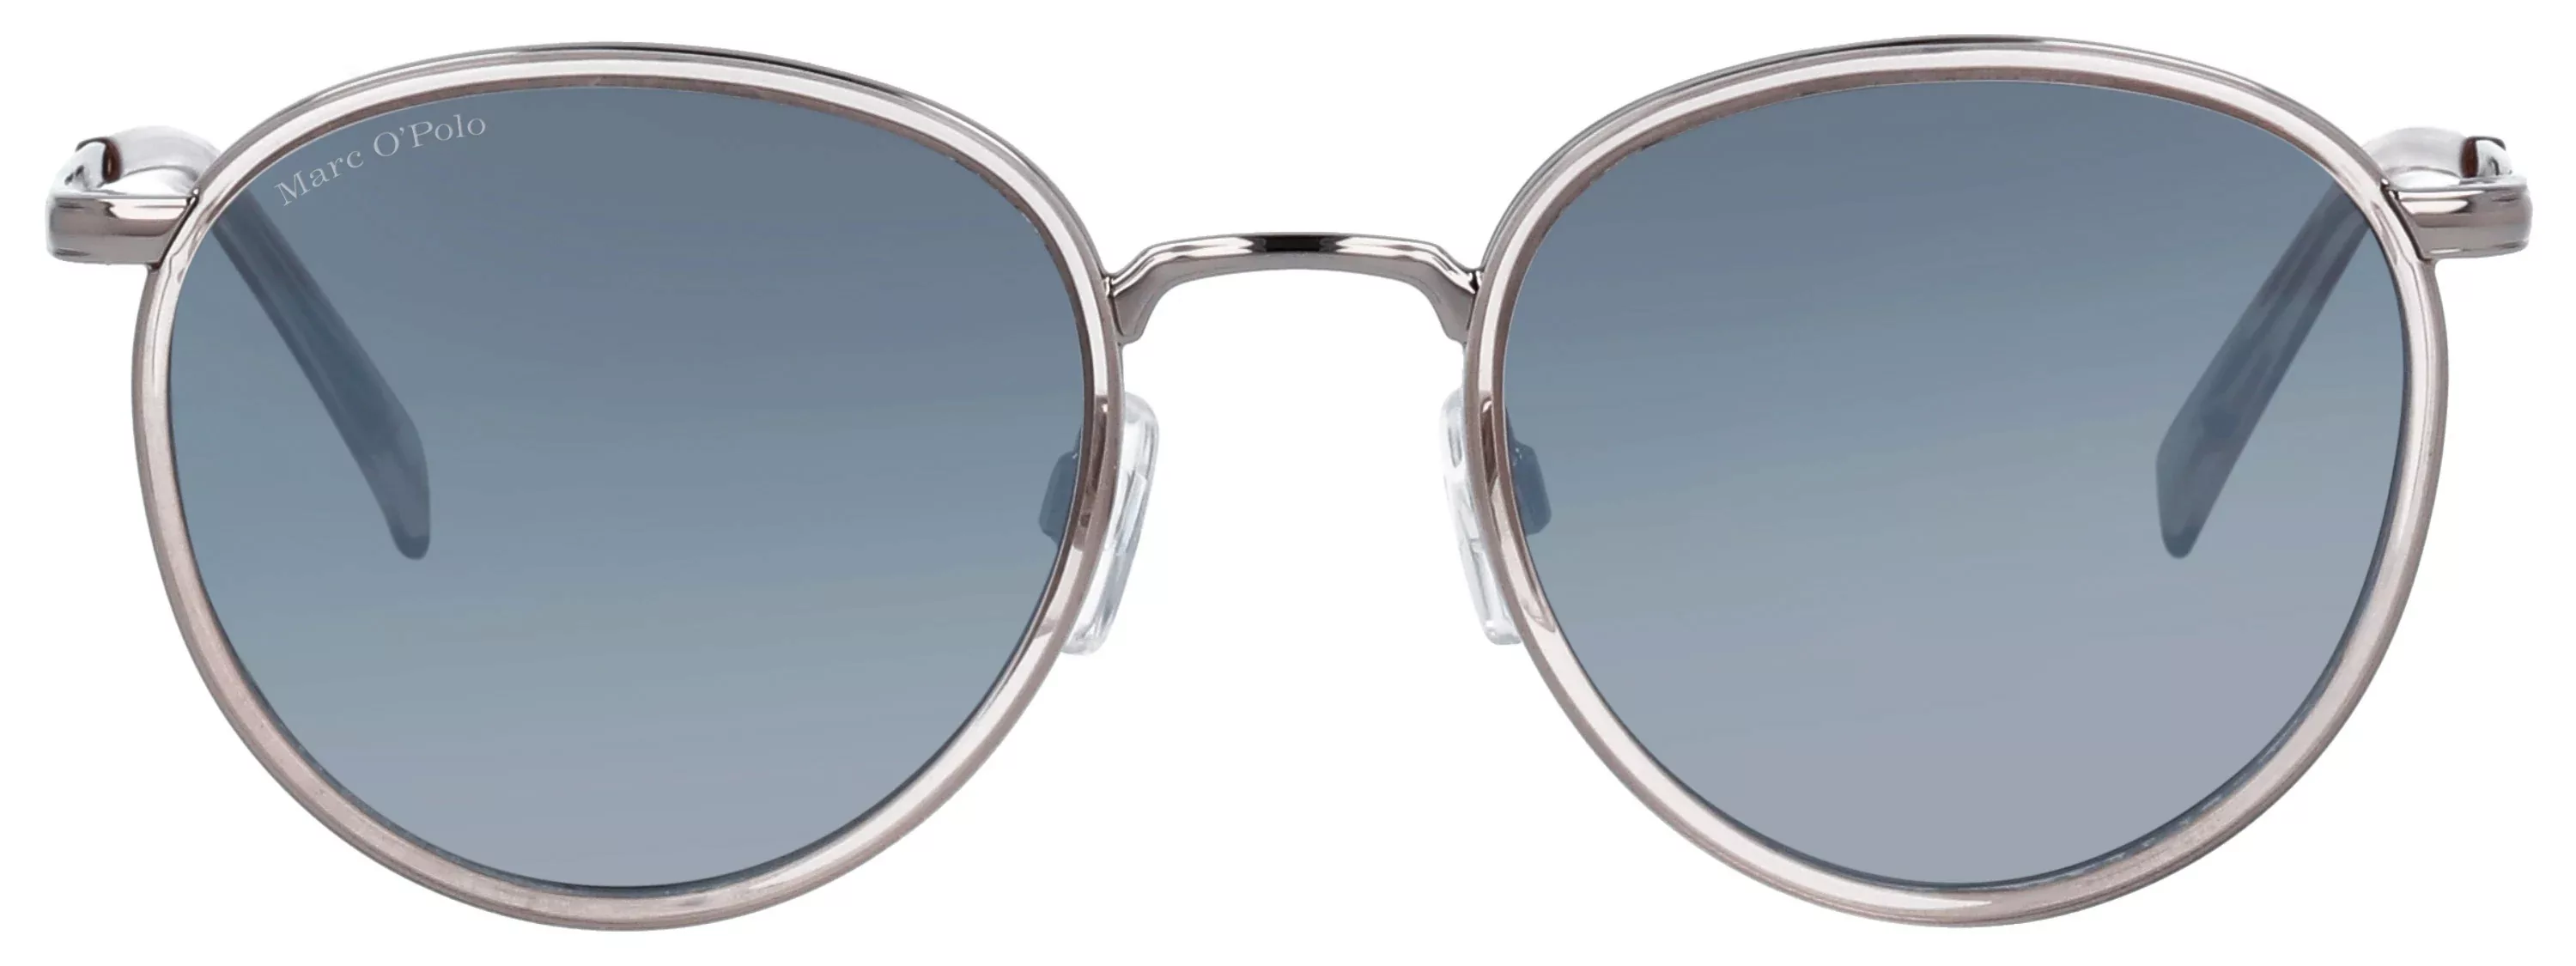 Marc OPolo Sonnenbrille "Modell 505105", Panto-Form günstig online kaufen